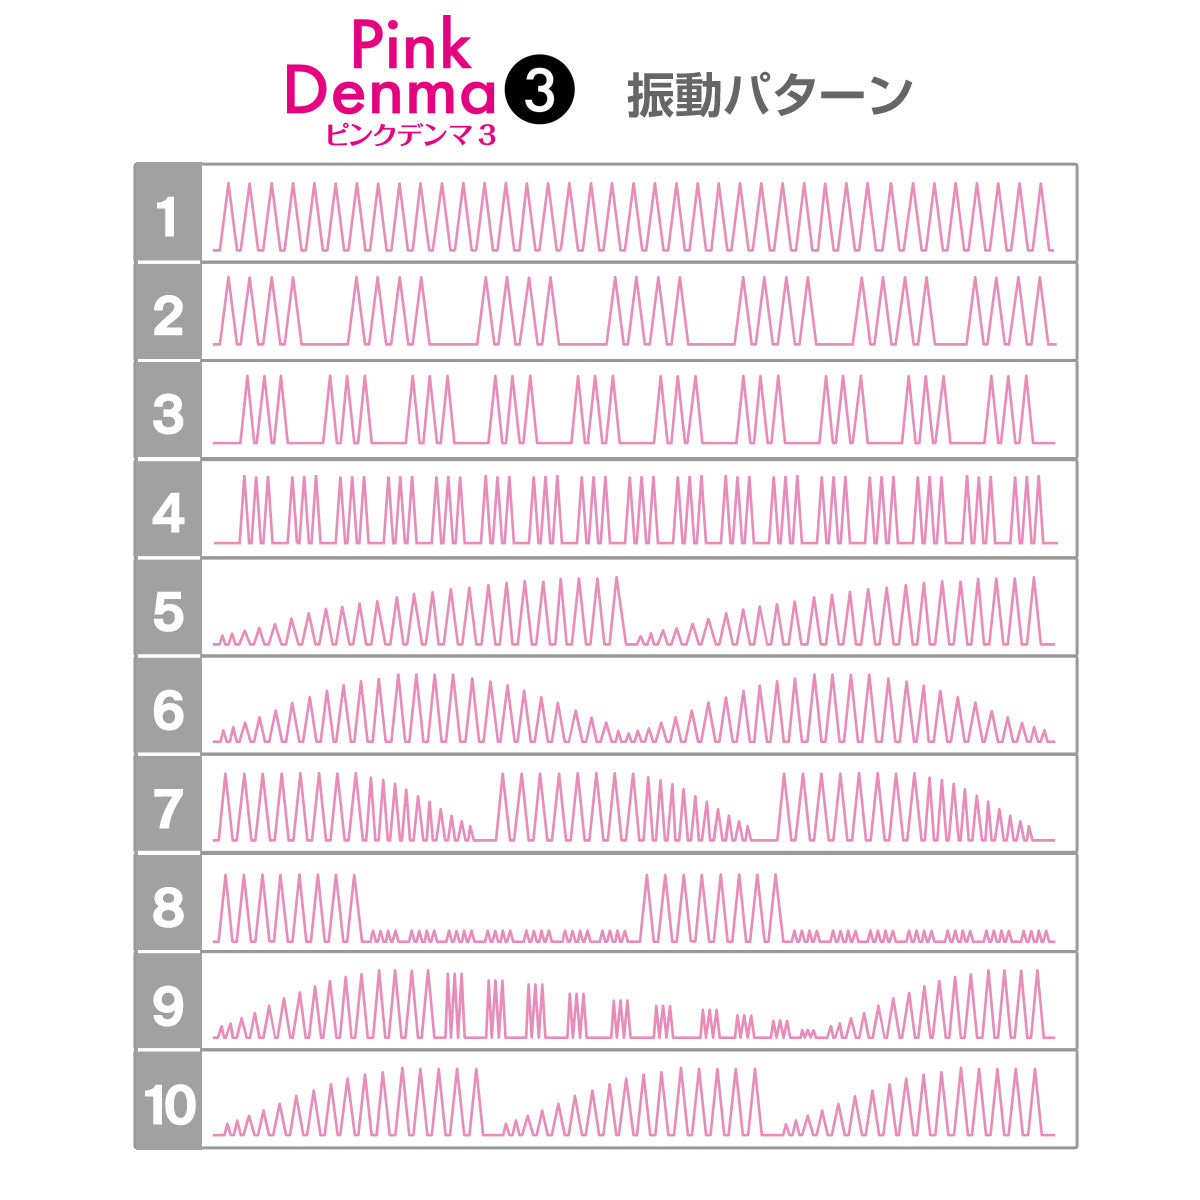 Pink Denma 3 絕對潮吹按摩棒第3代 粉紅色